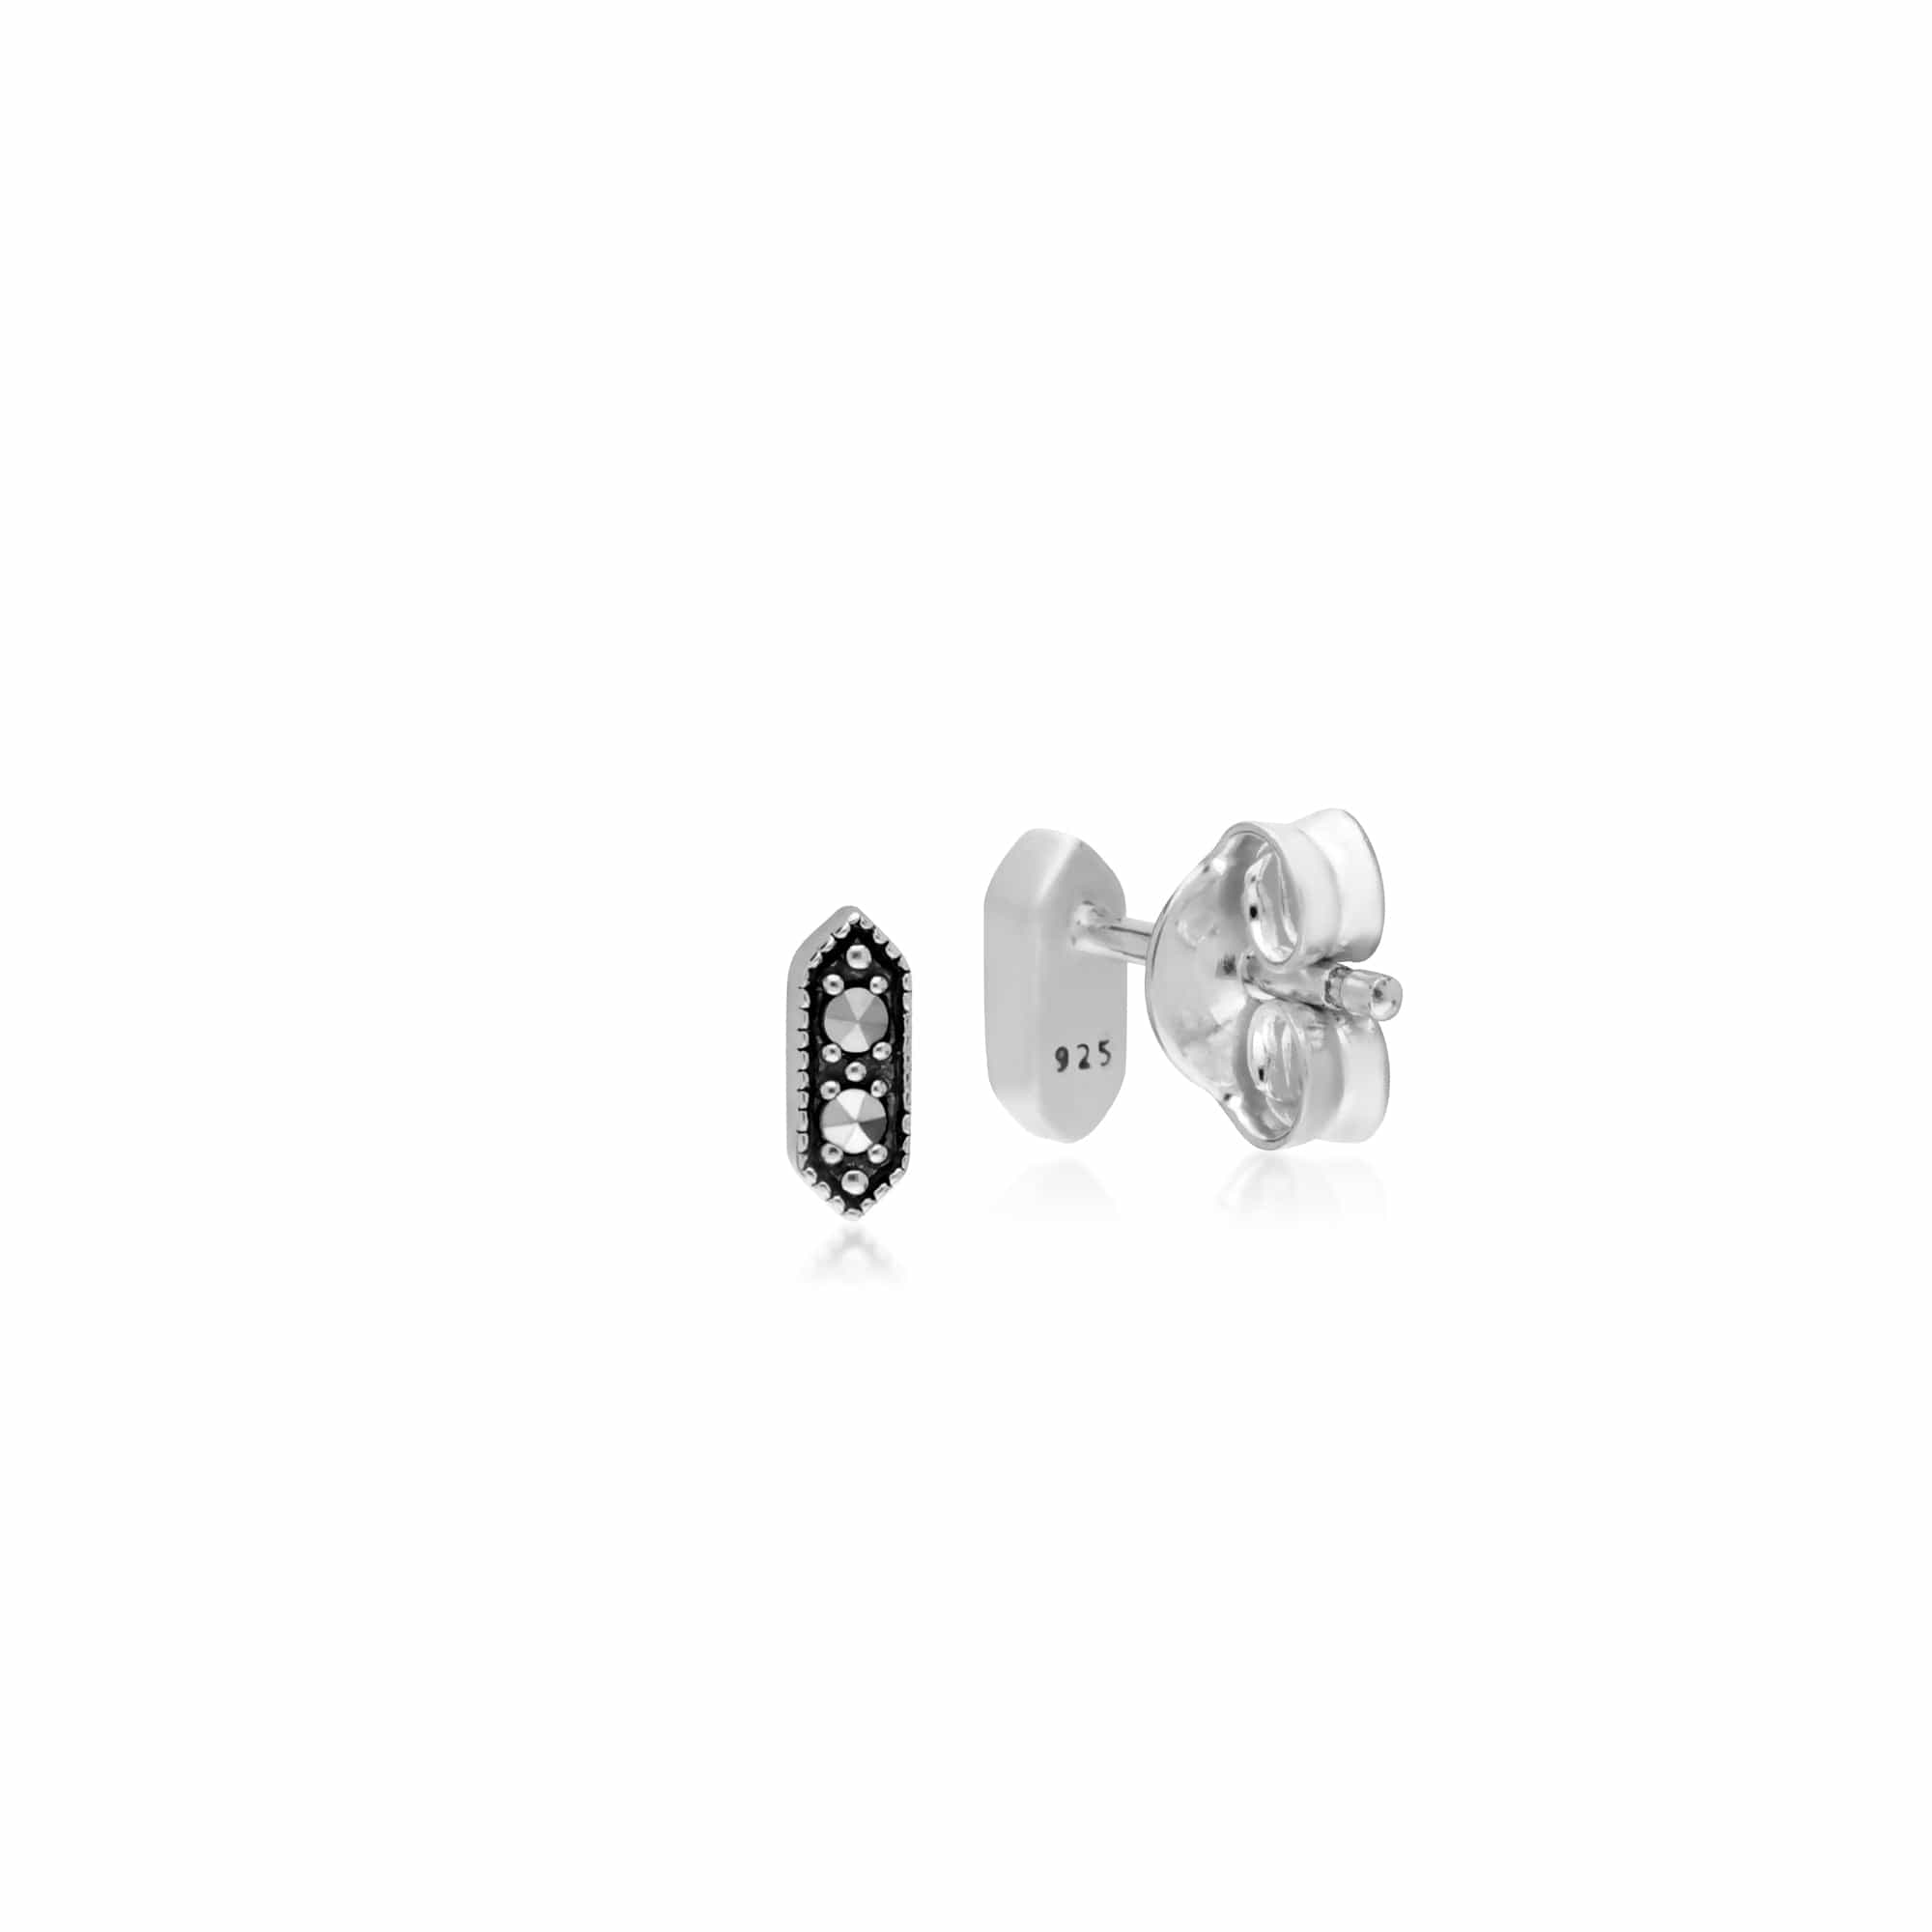 214E873601925 Geometric Round Marcasite Hexagon Stud Earrings in 925 Sterling Silver 2